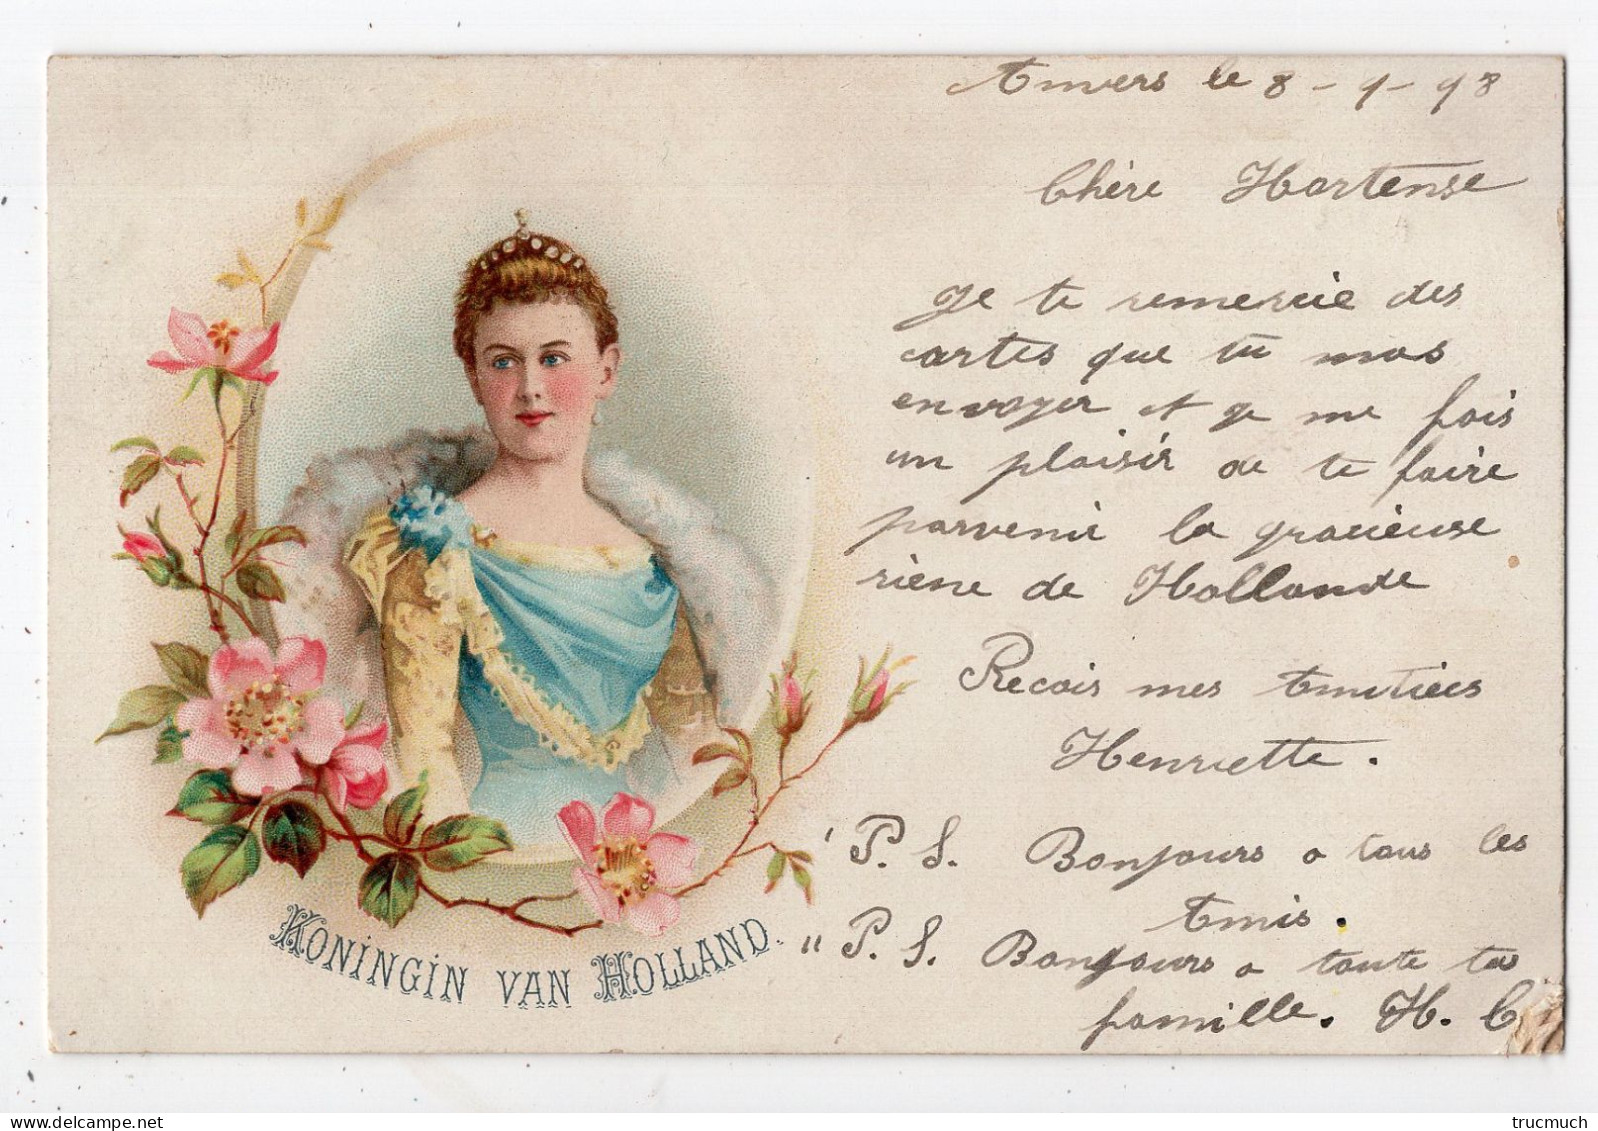 136 - FAMILLE ROYALE - HOLLANDE - Konigin Van Holland *1898* - Royal Families